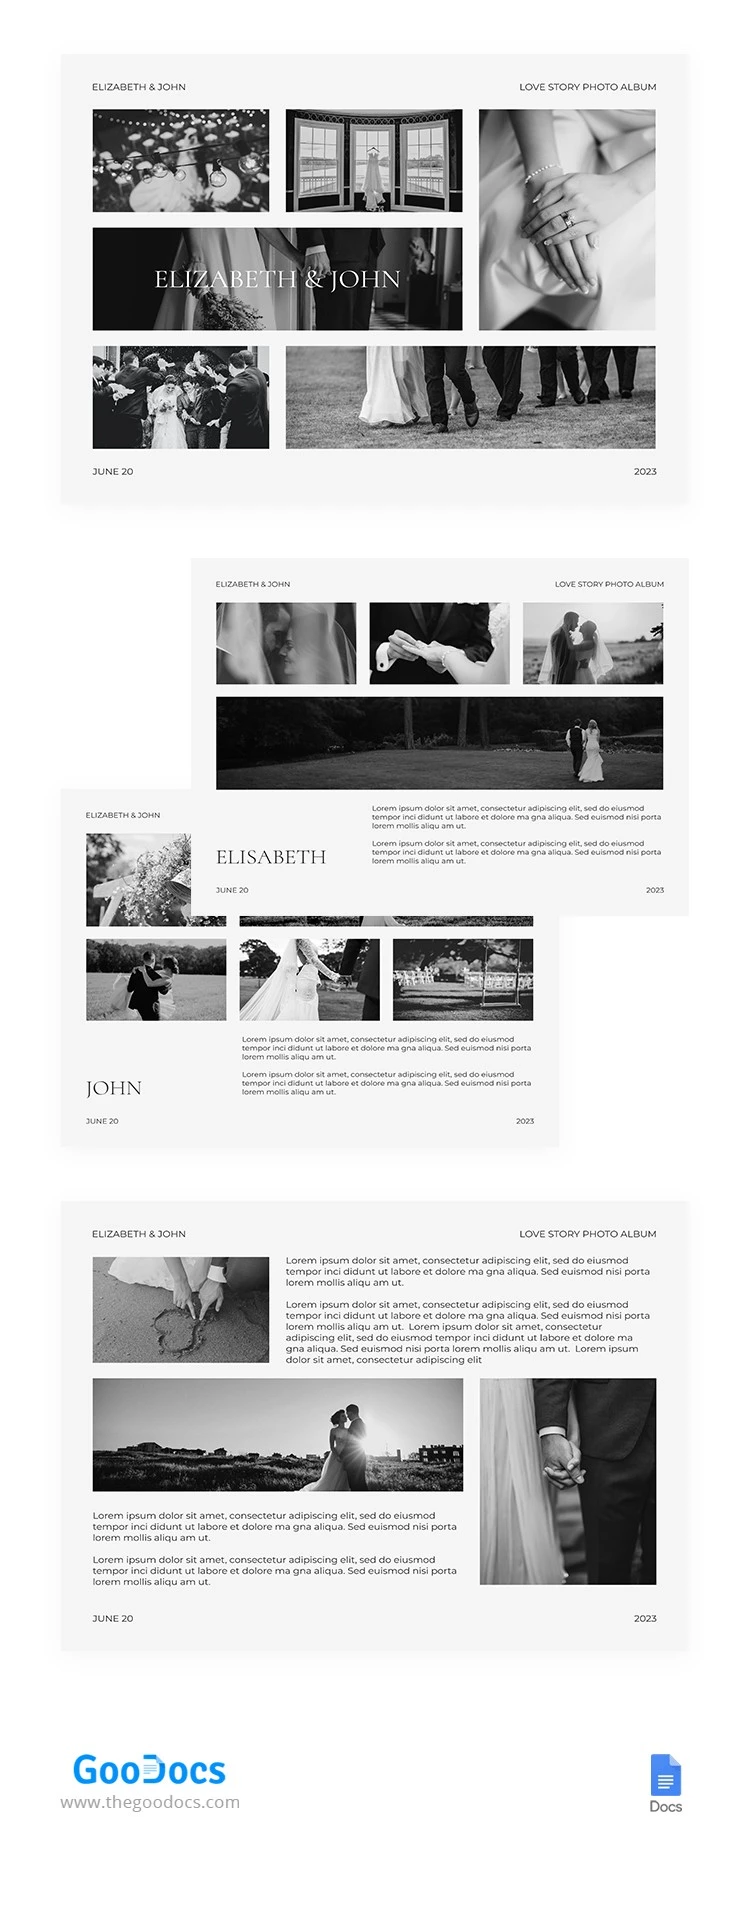 Black & White Love Story Photo Album - free Google Docs Template - 10066006